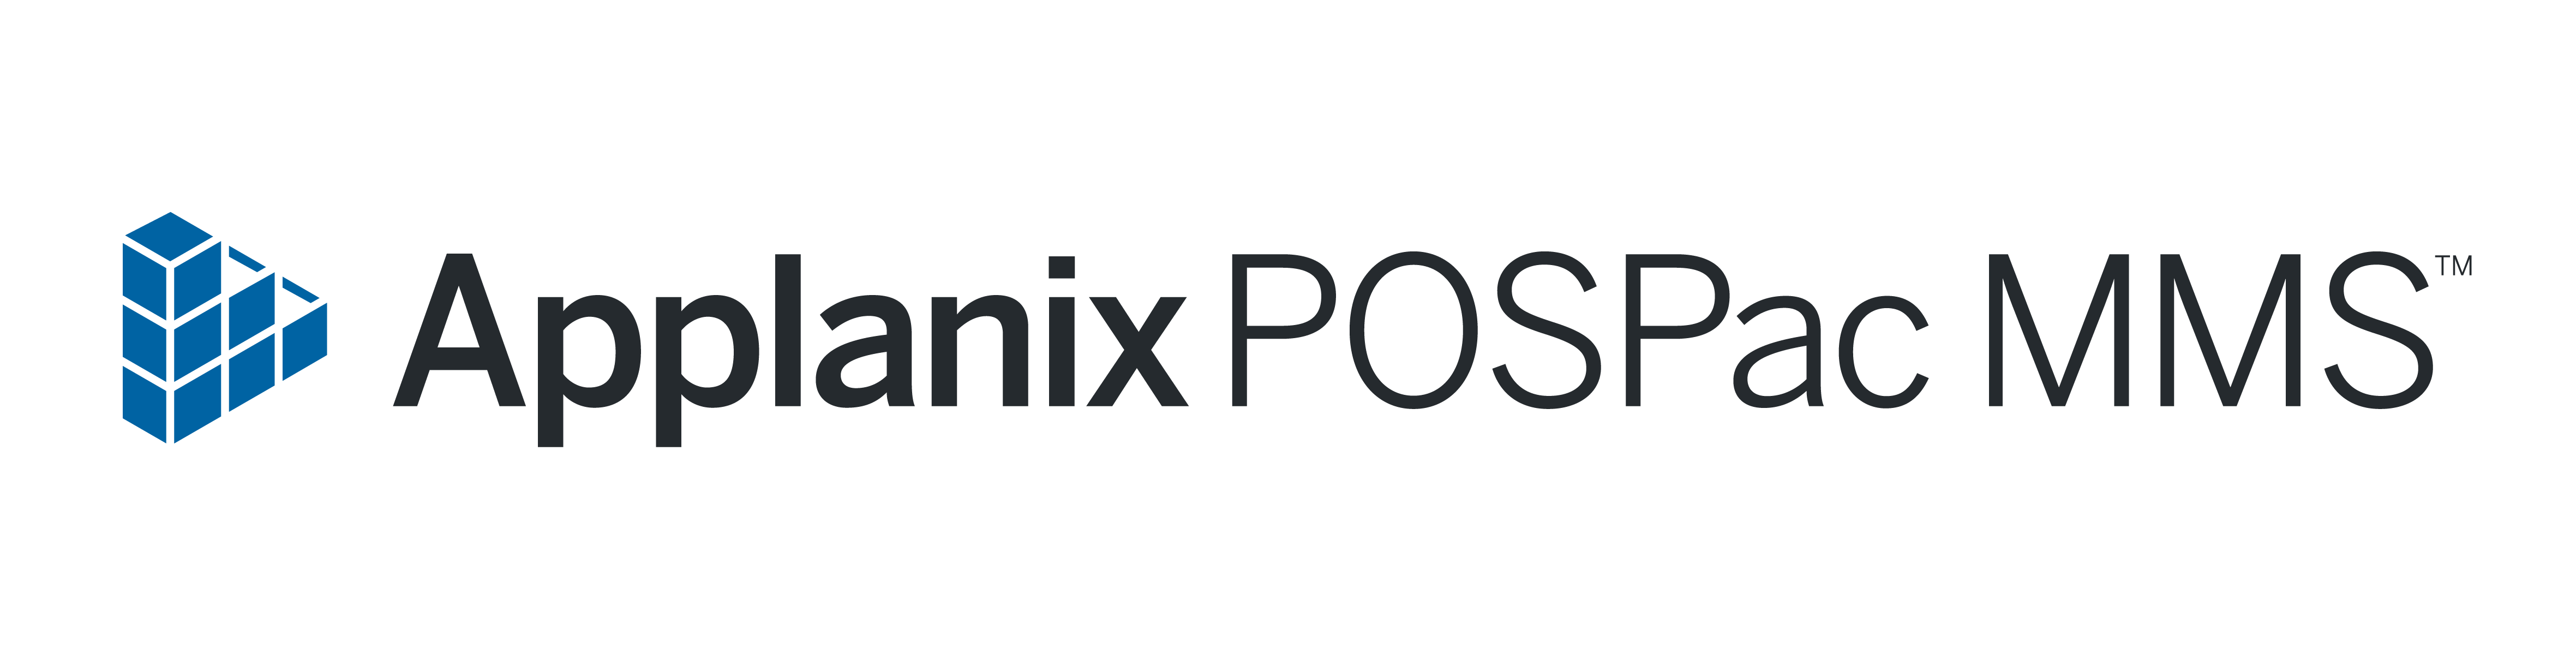 Applanix POSPac MMS Logo